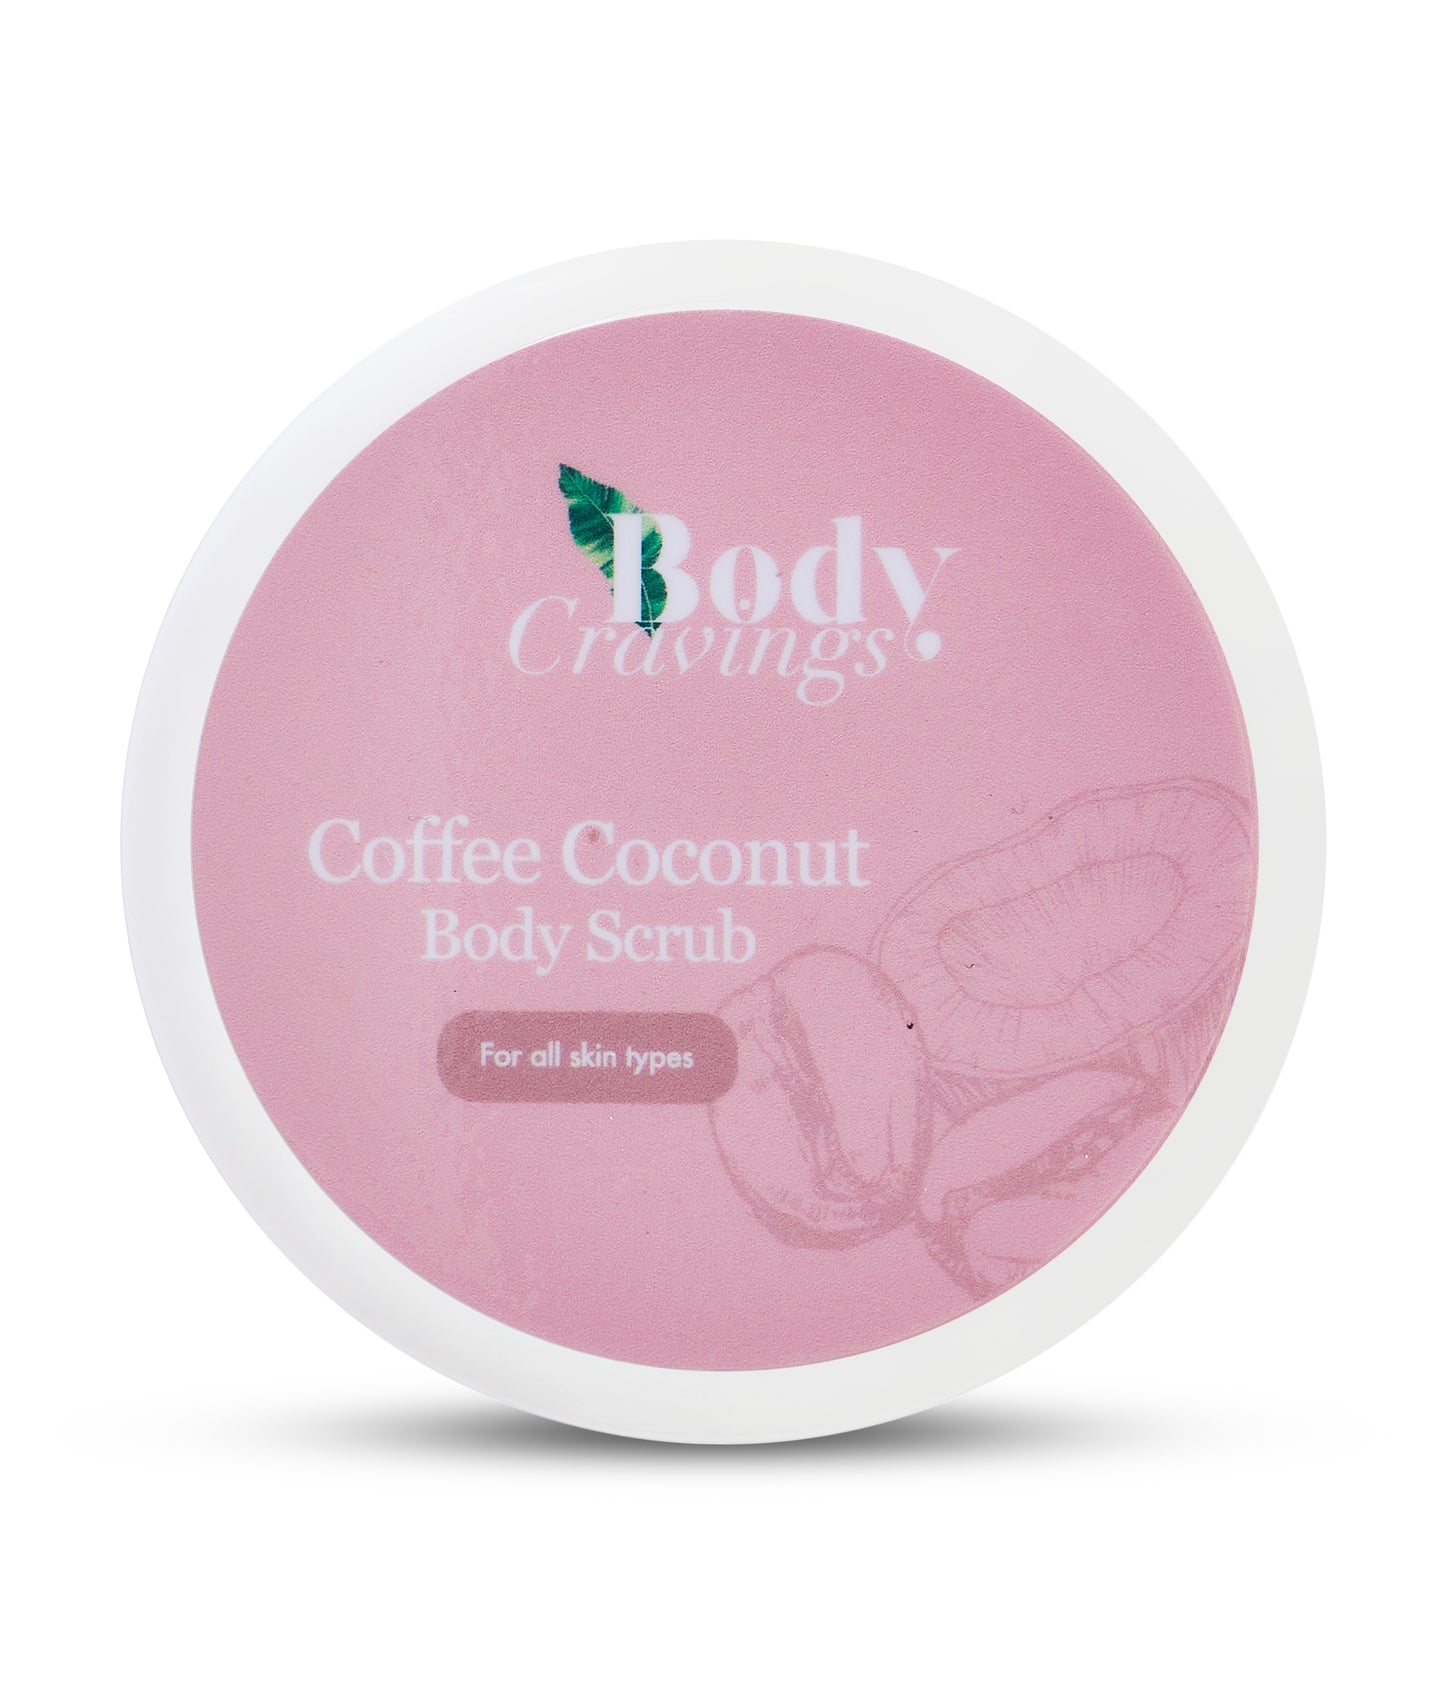 Coffee Coconut Body Scrub